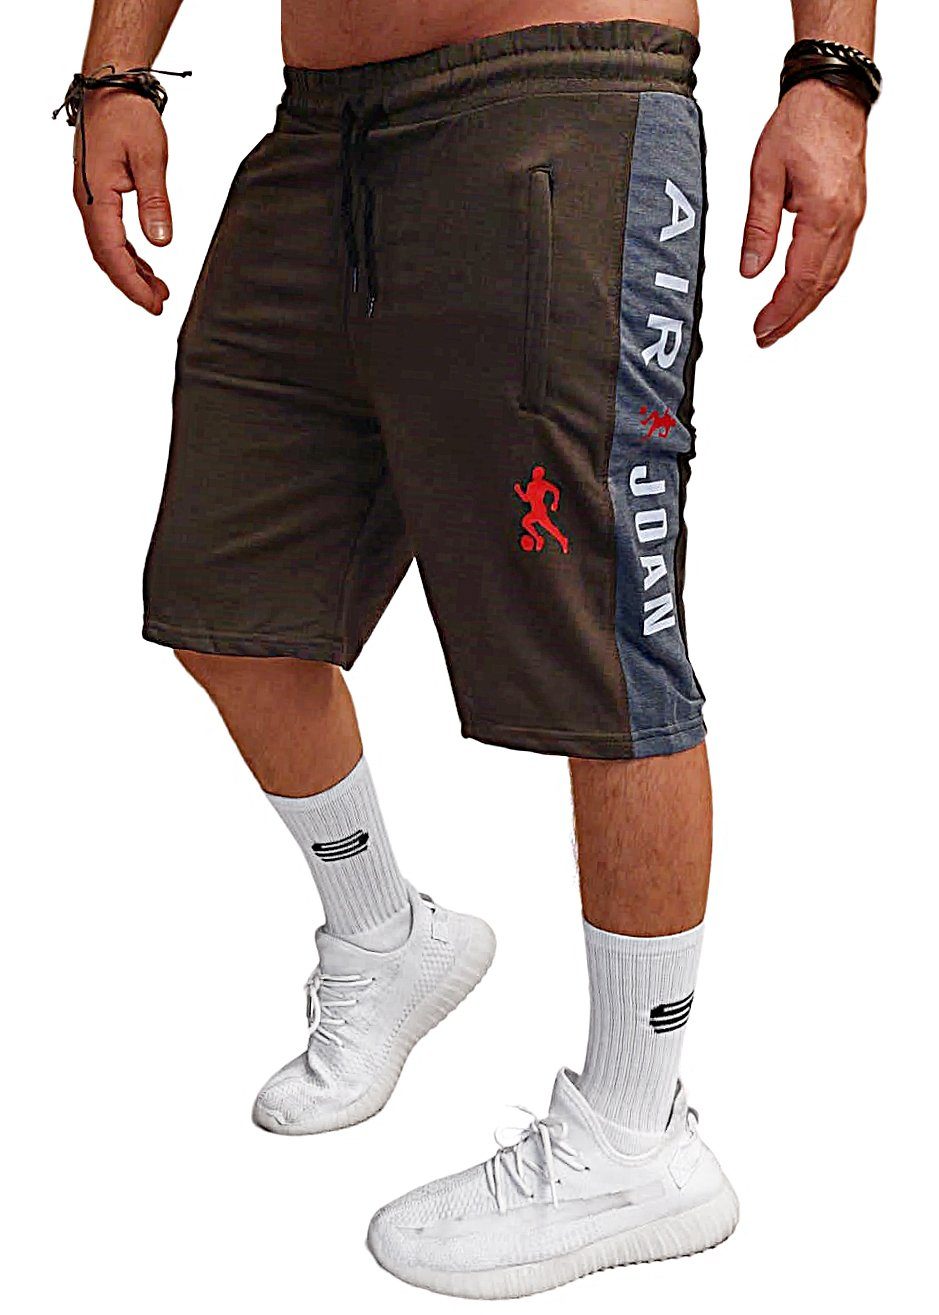 RMK Shorts Herren (1006) sport Short Hose shorts 3/4 Sommer Capri Fitness Khaki kurz Bermuda uni tarn